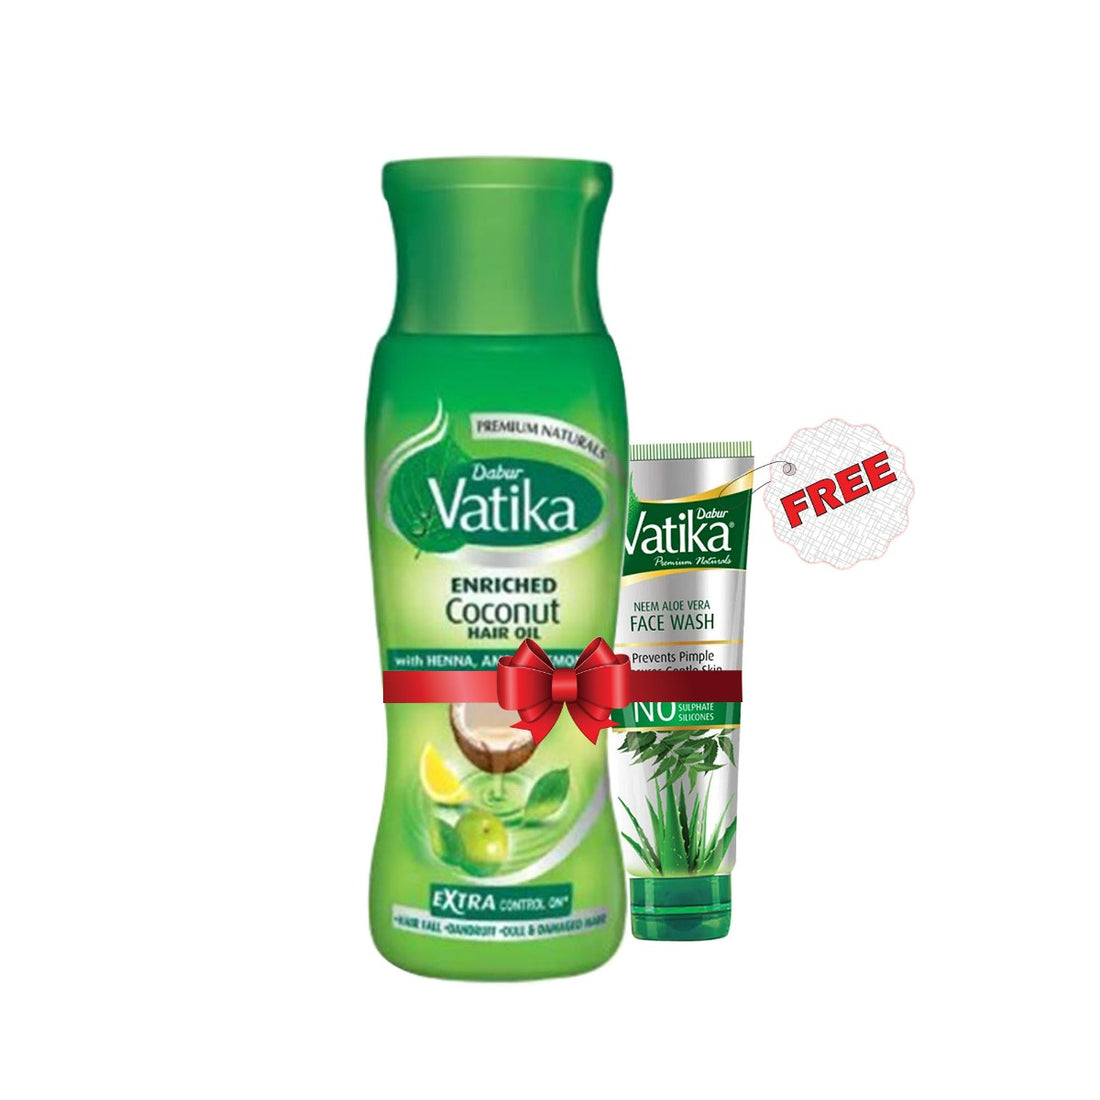 Dabur Vatika Enriched Coconut Hair Oil - 300ml (Free Vatika Facewash 50ml)